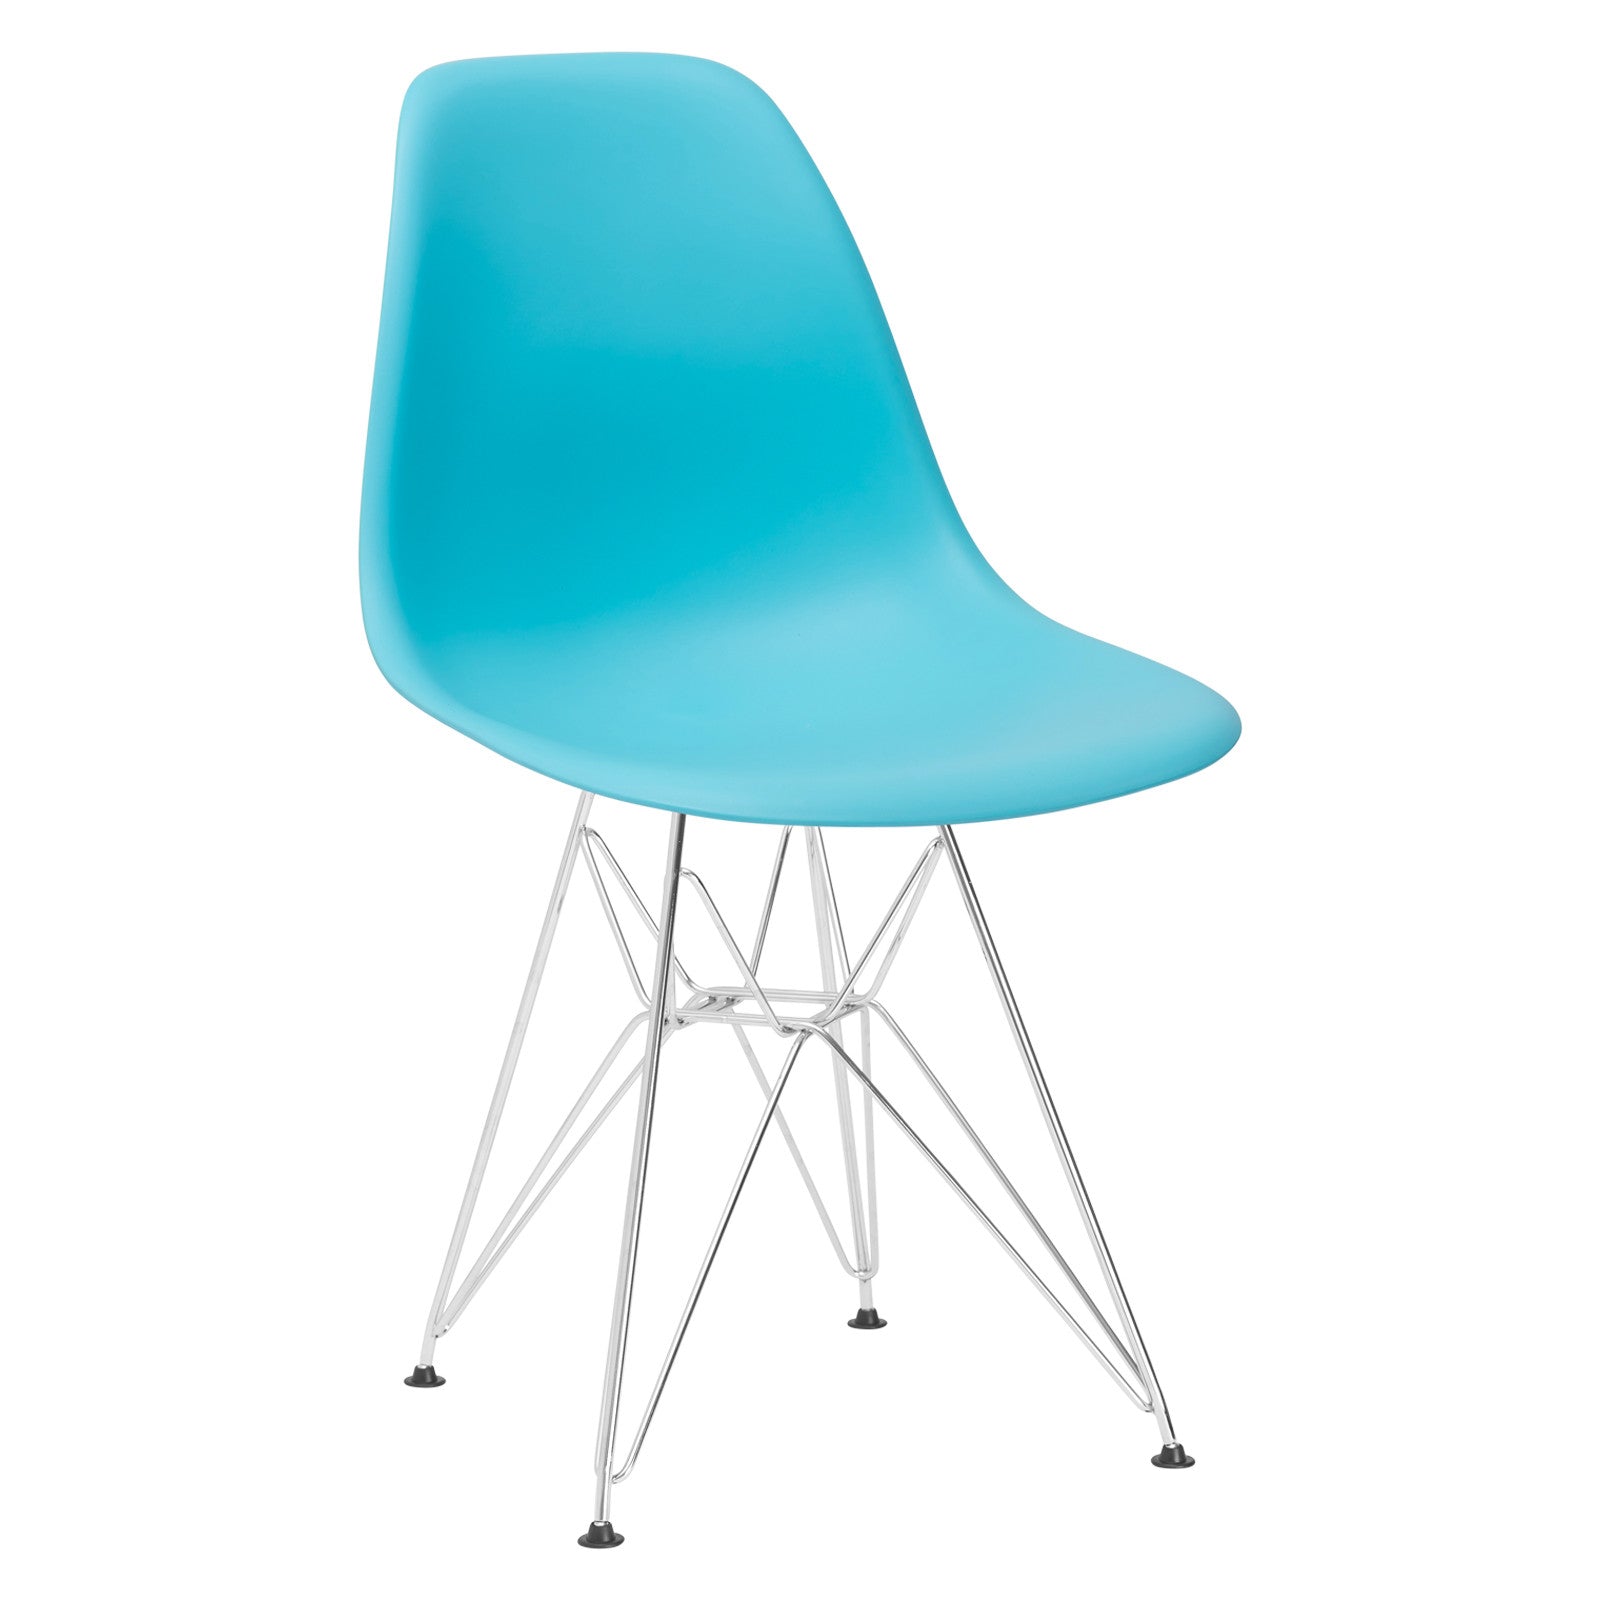 Lanna Furniture Fah Side Chair-Minimal & Modern